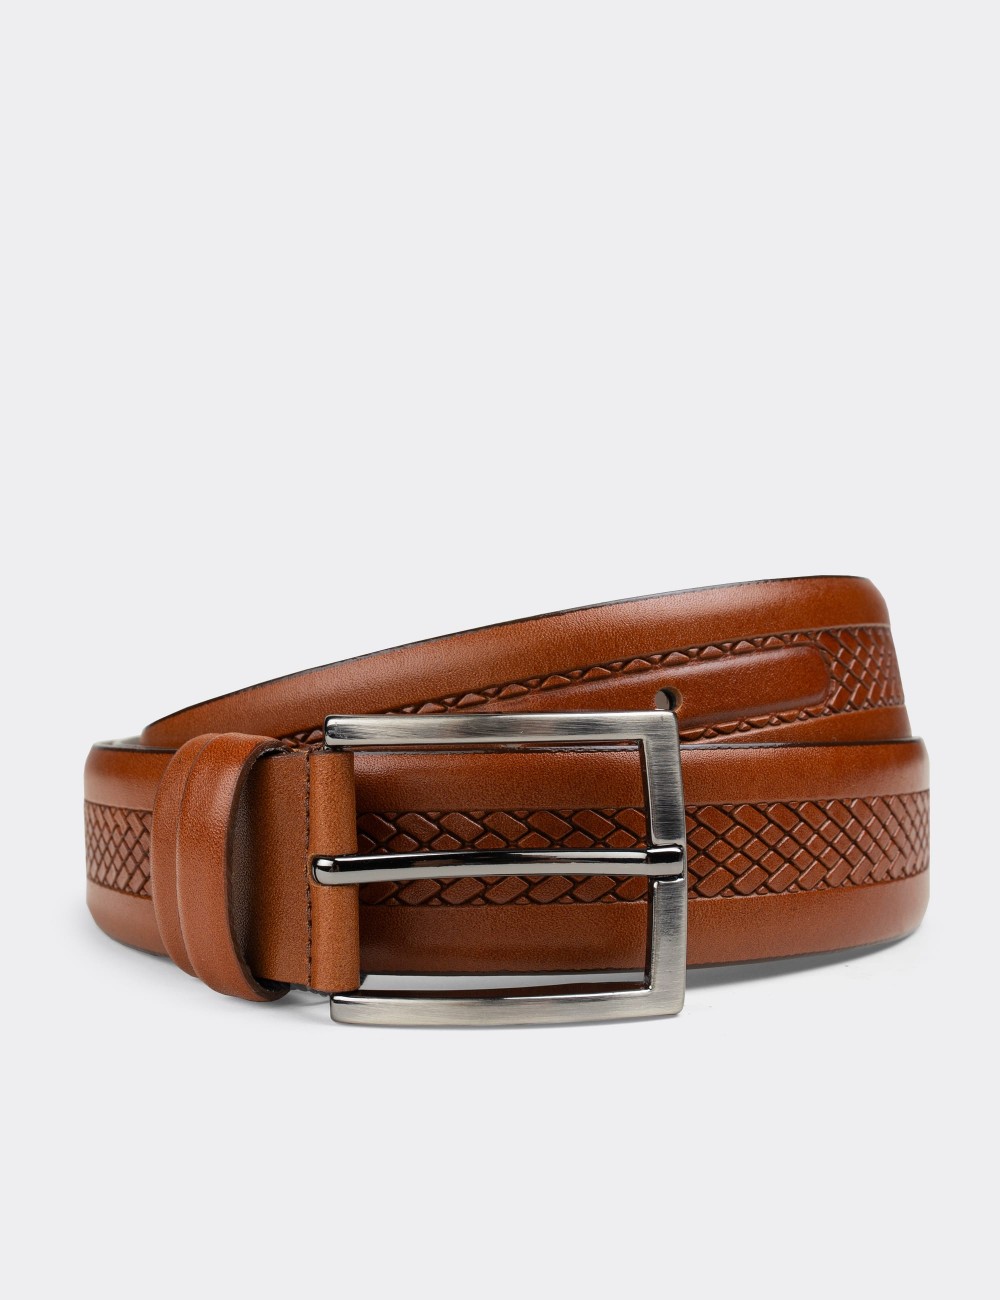  Leather Tan Men's Belt - K0401MTBAW01